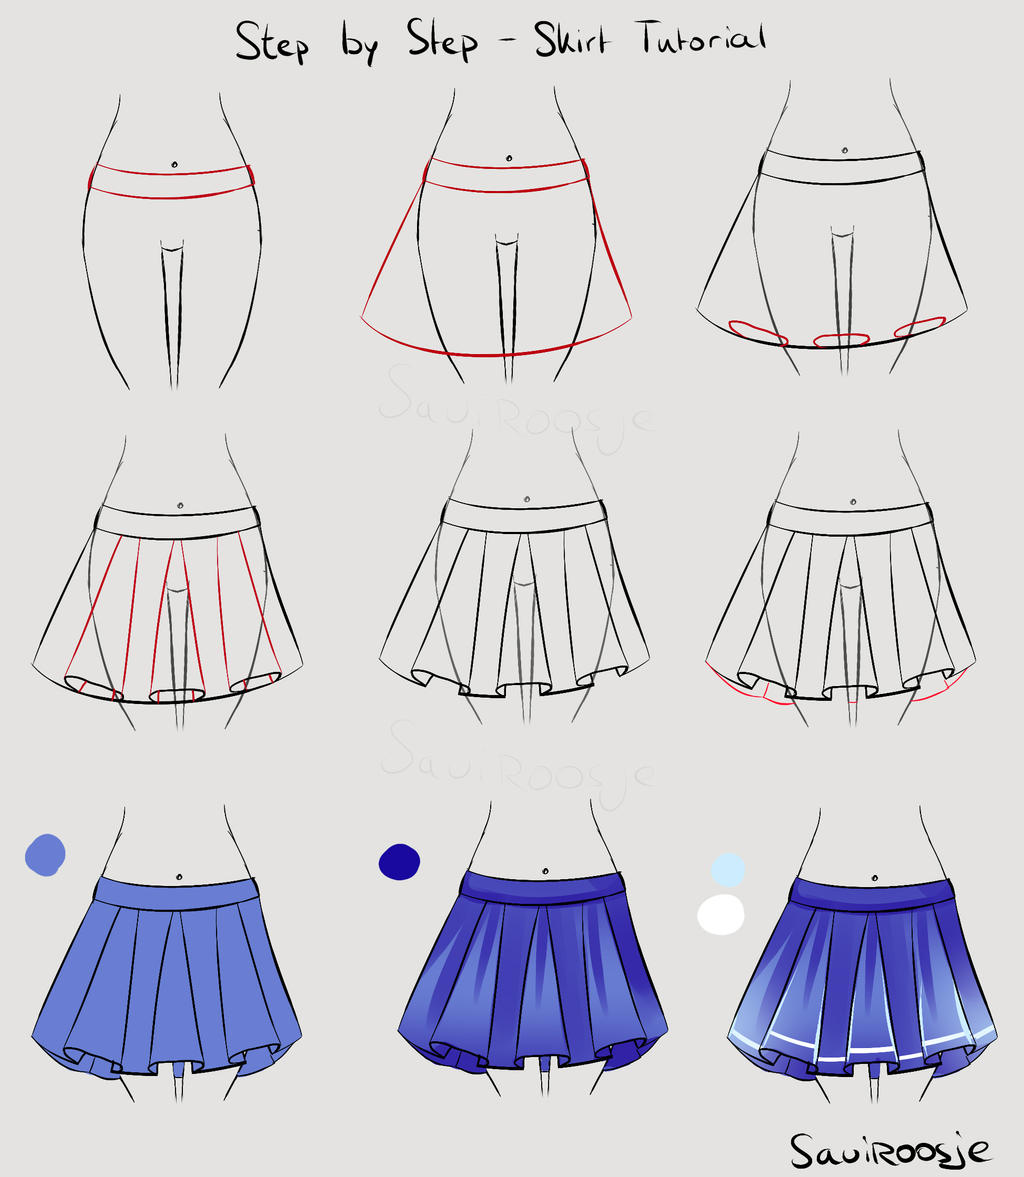 Step by Step - School girl Skirt by Saviroosje on DeviantArt